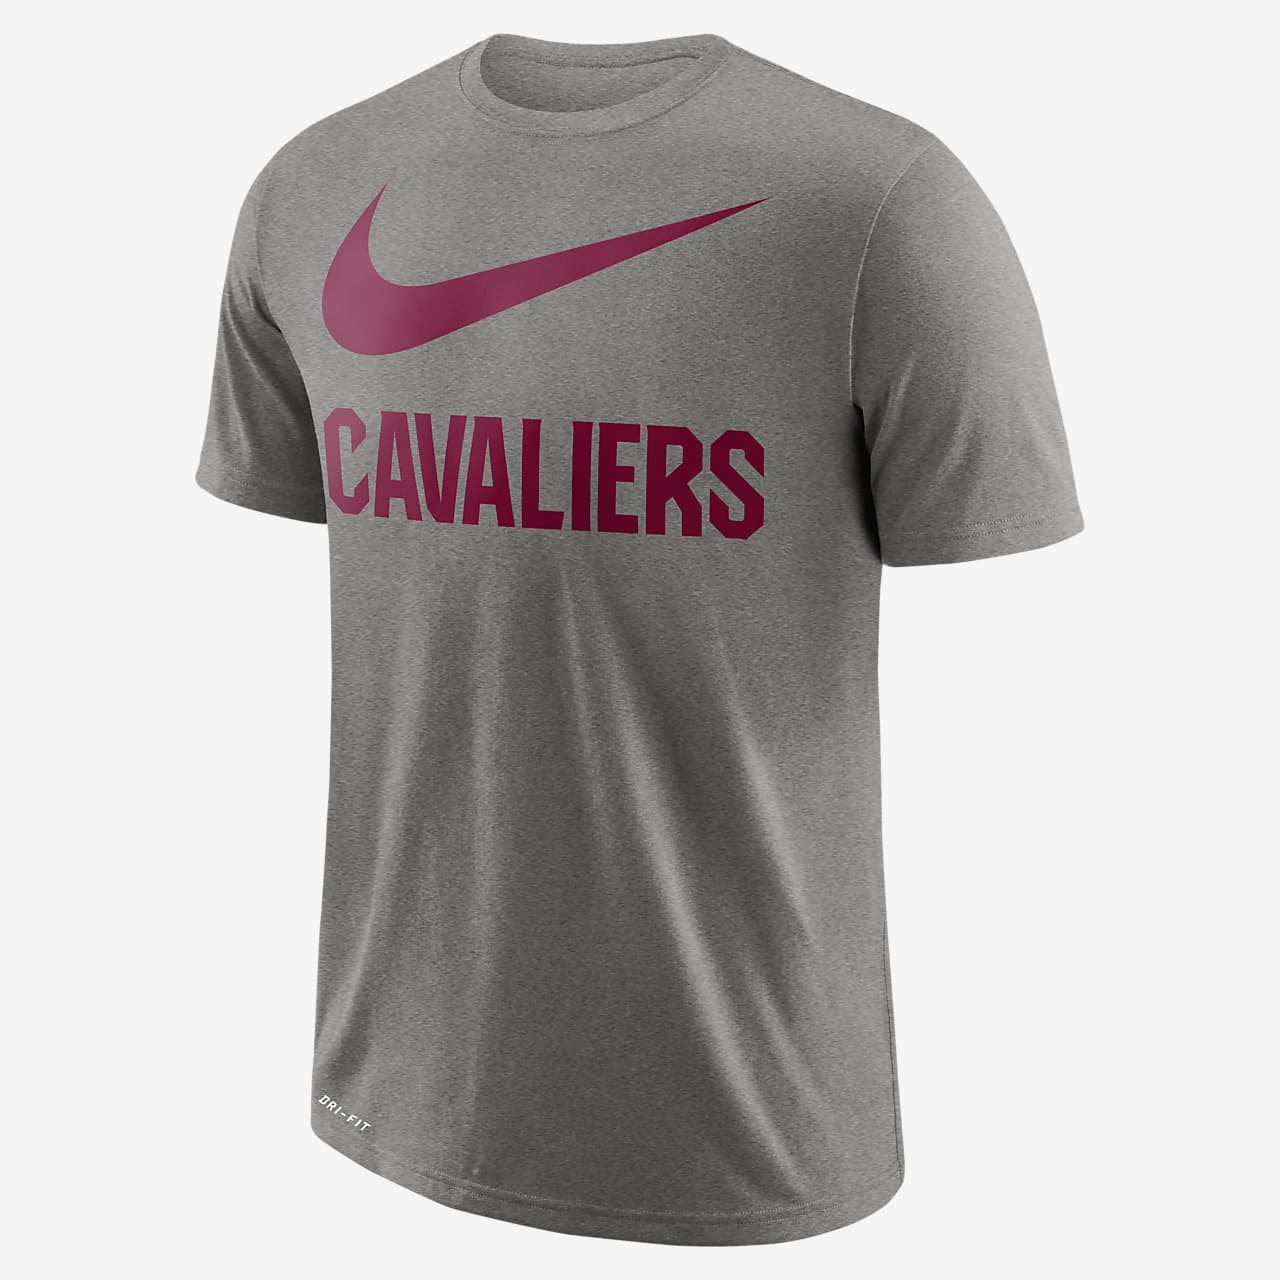 cavaliers t shirt